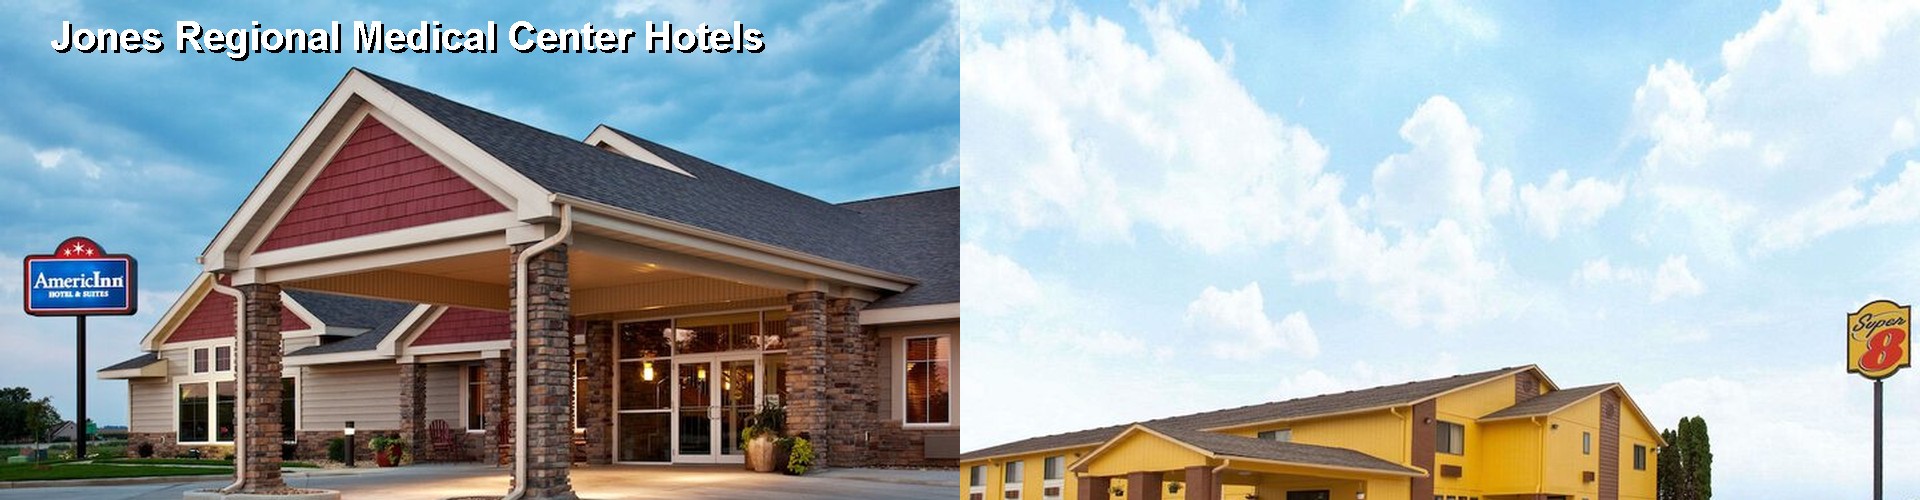 4 Best Hotels near Jones Regional Medical Center